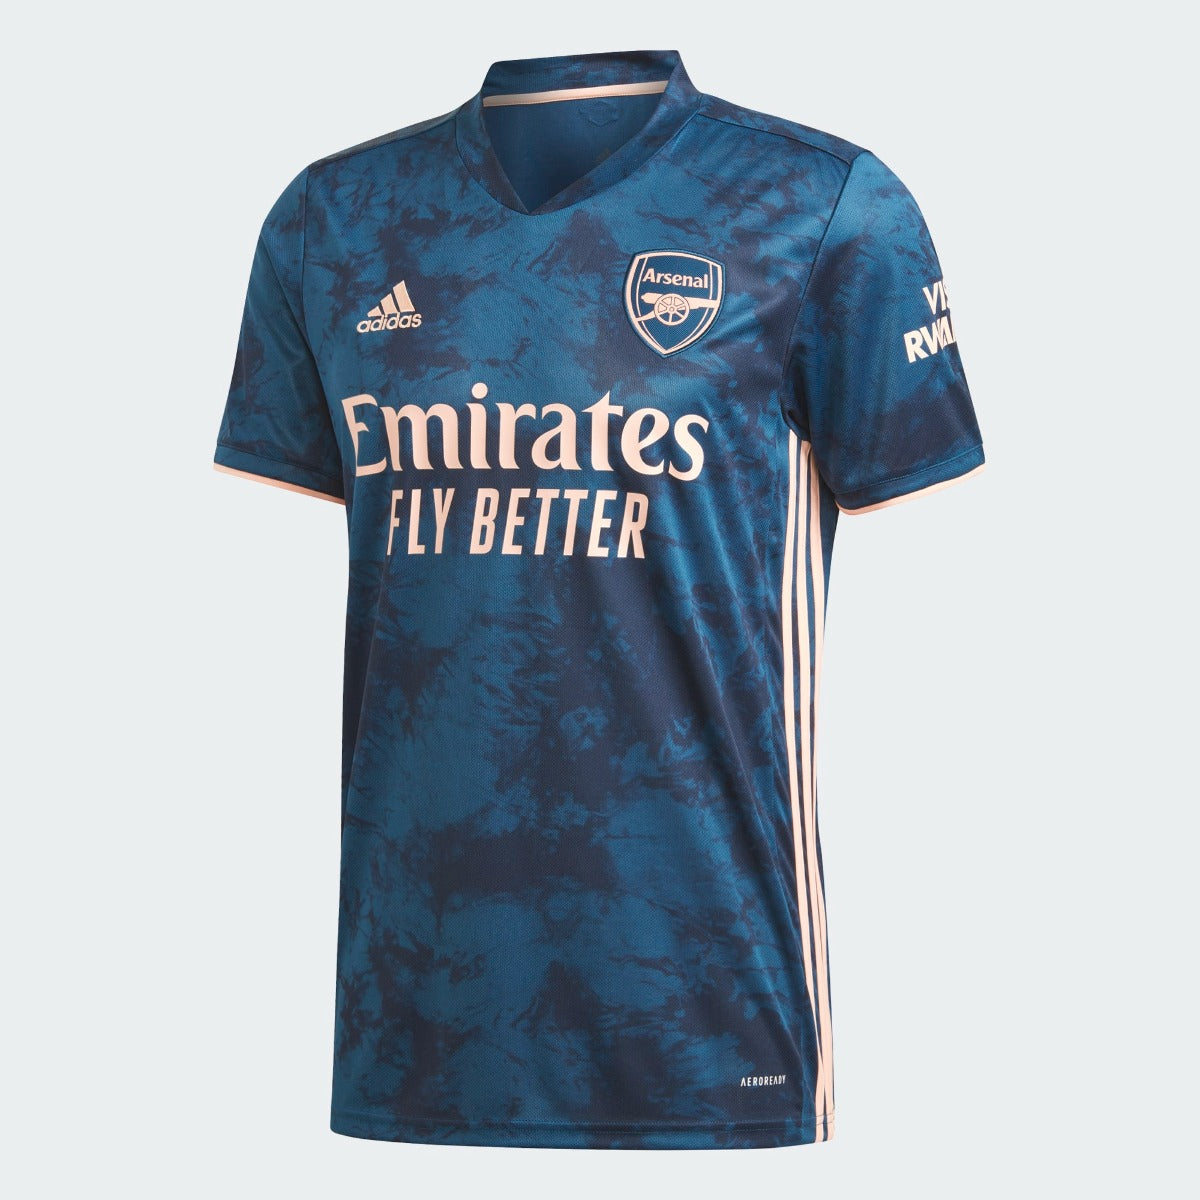 Adidas 2020-21 Arsenal Third Jersey - Navy-Pink